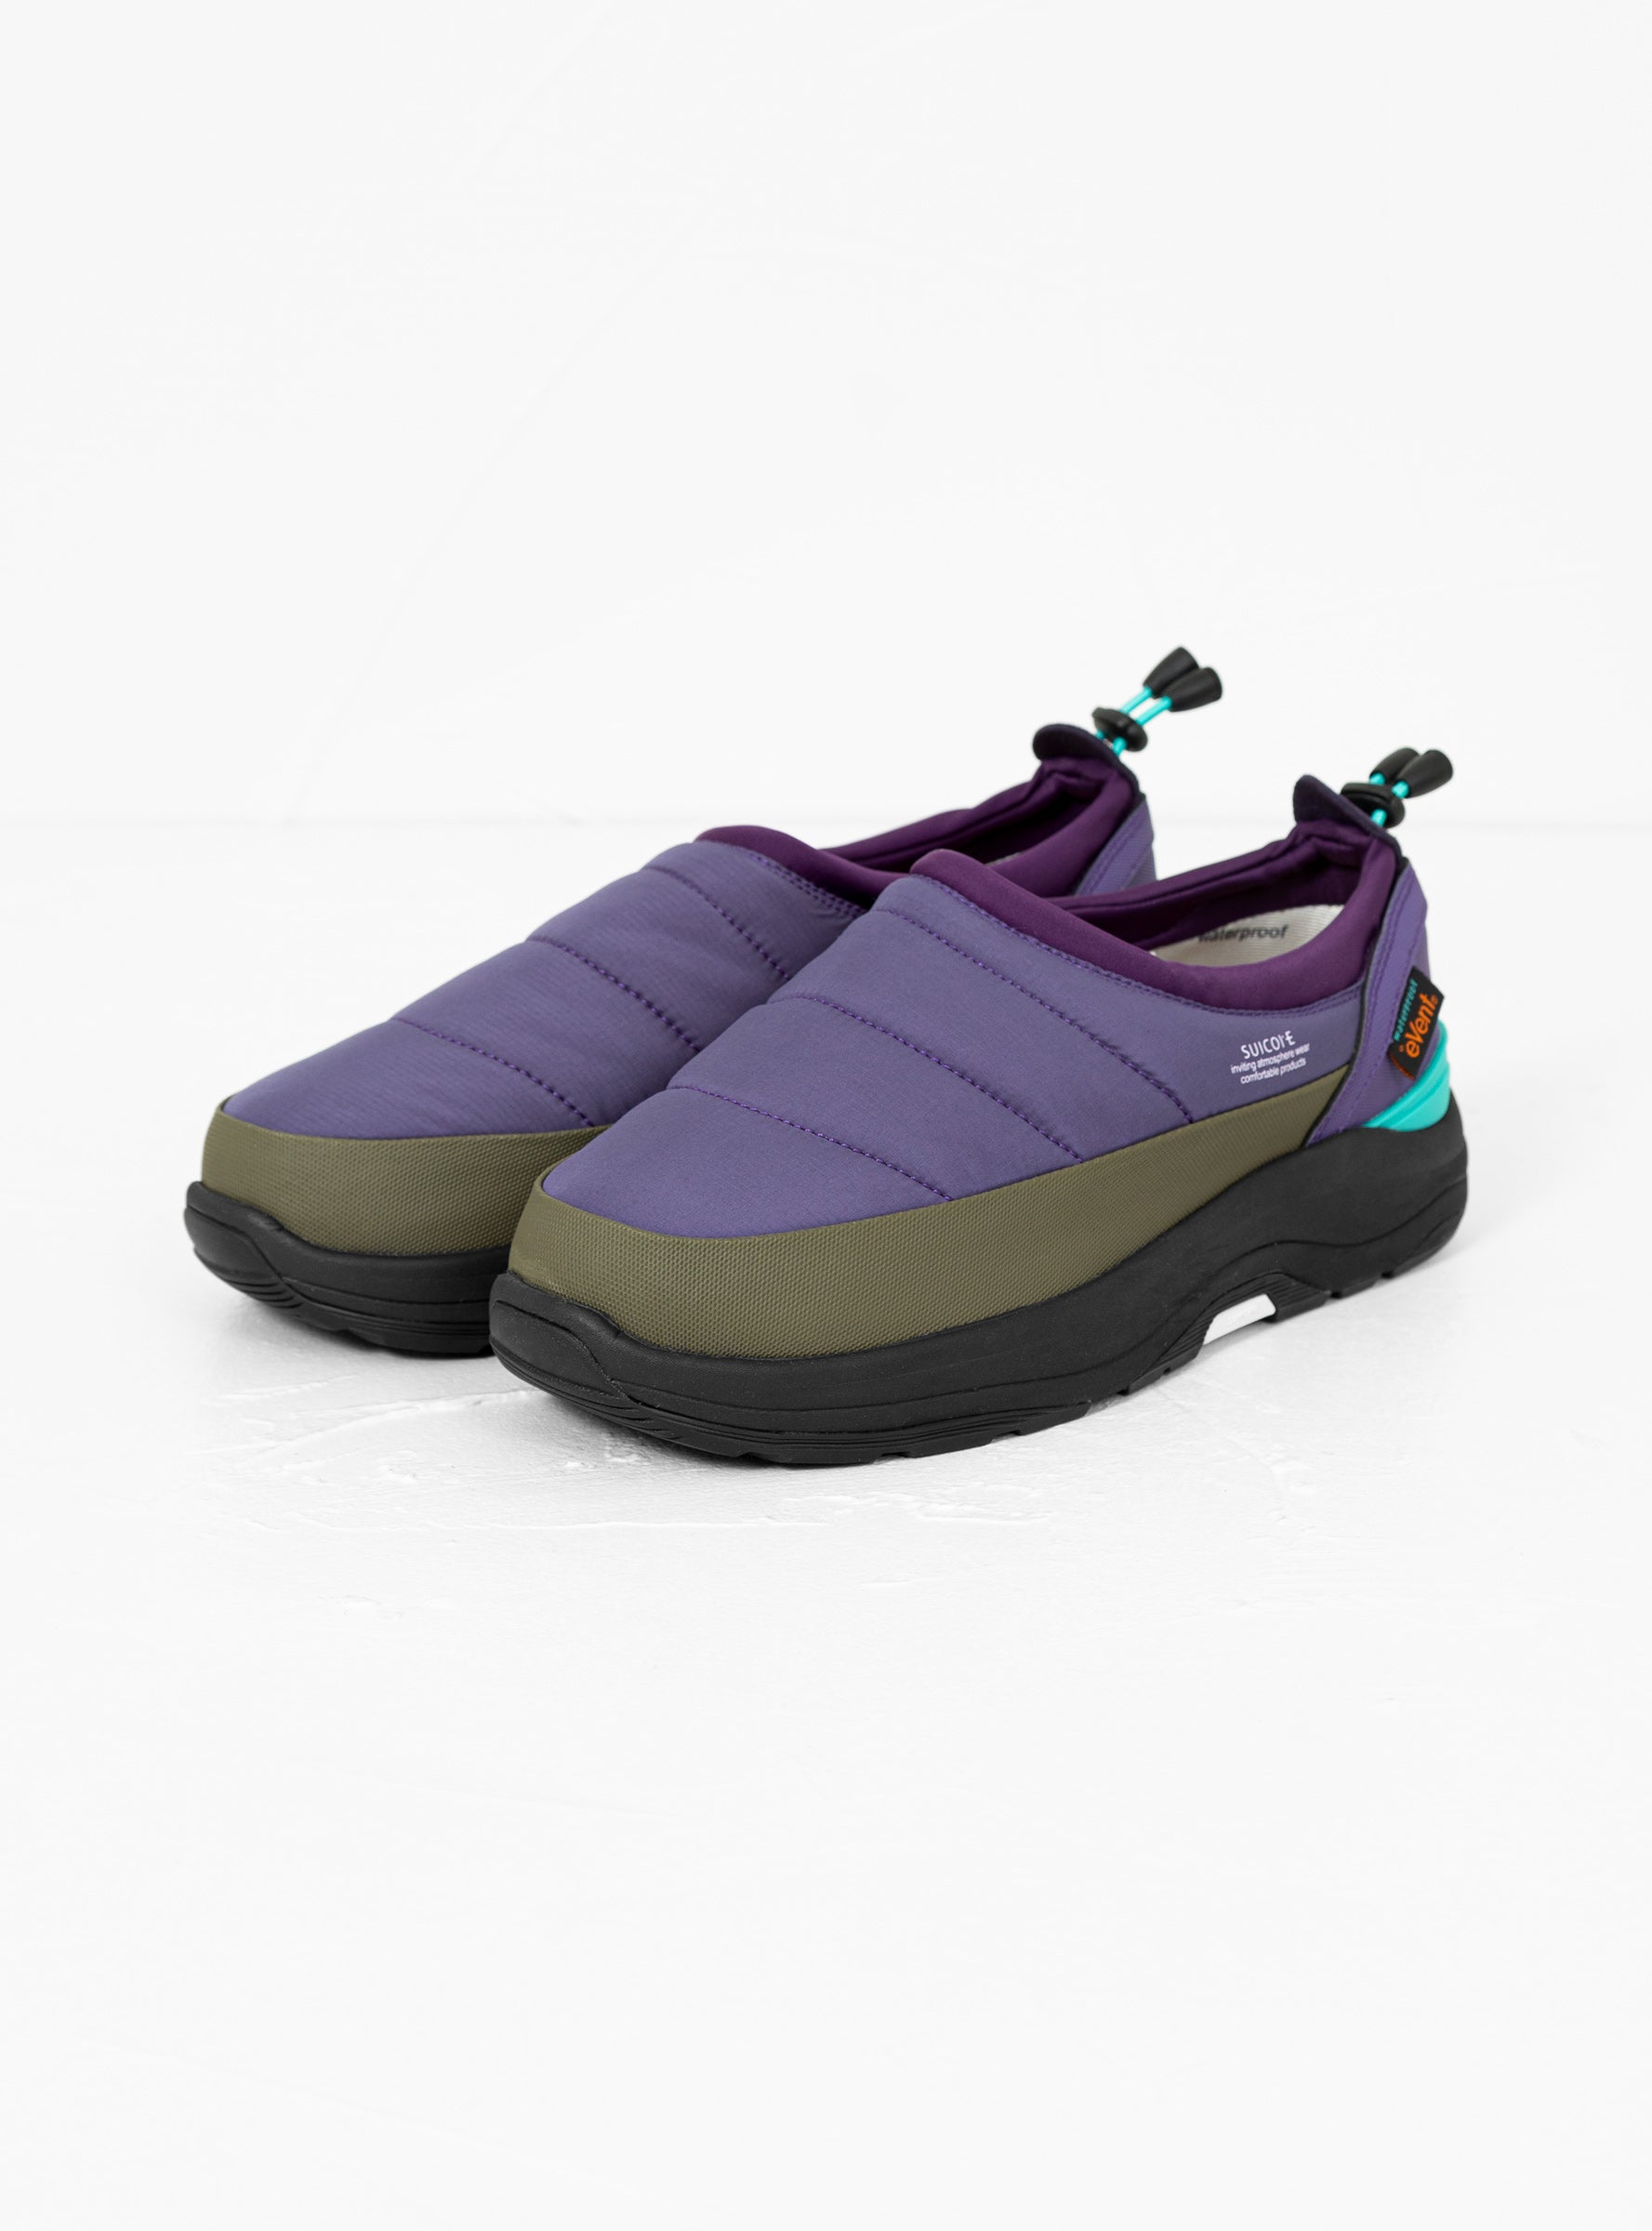 Suicoke Suicoke Pepper Modev Shoes Purple & Black - Size: UK 8